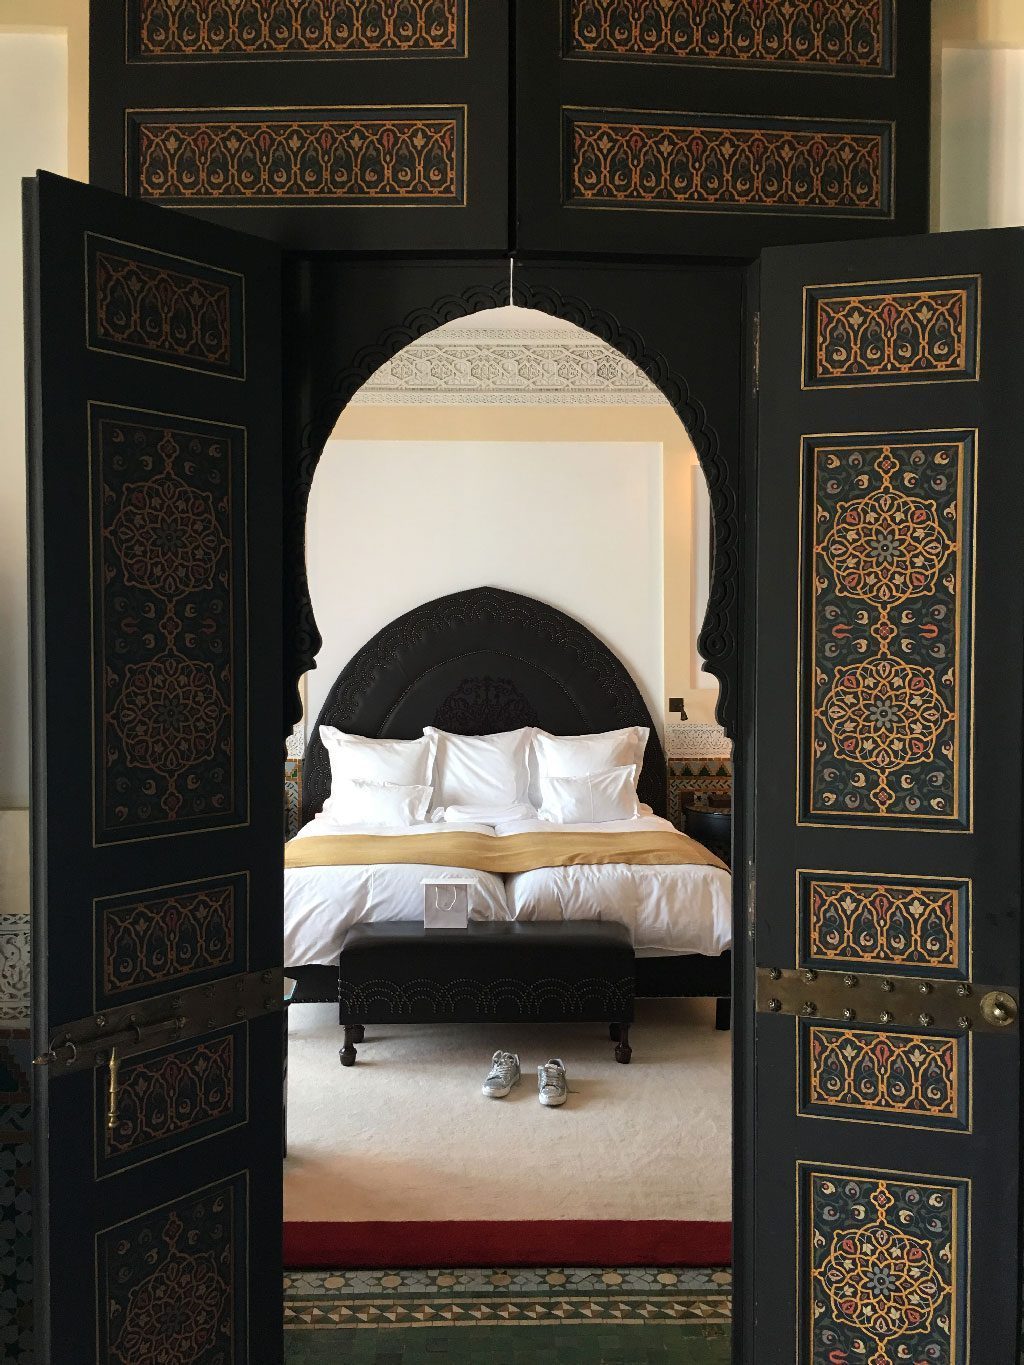 La Mamounia Marrakech